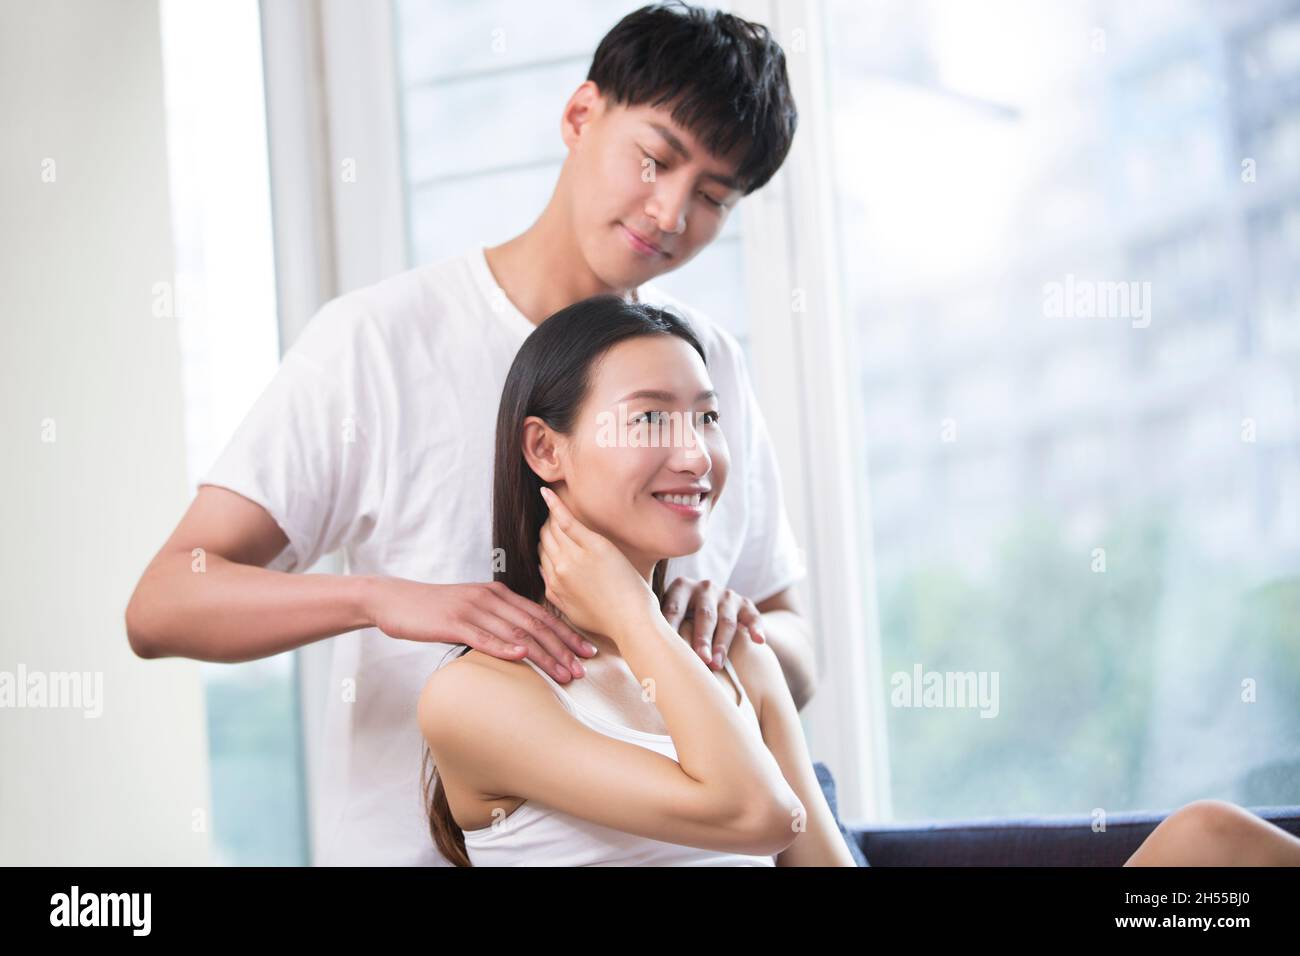 Junger Mann massiert seine Freundin Stockfoto